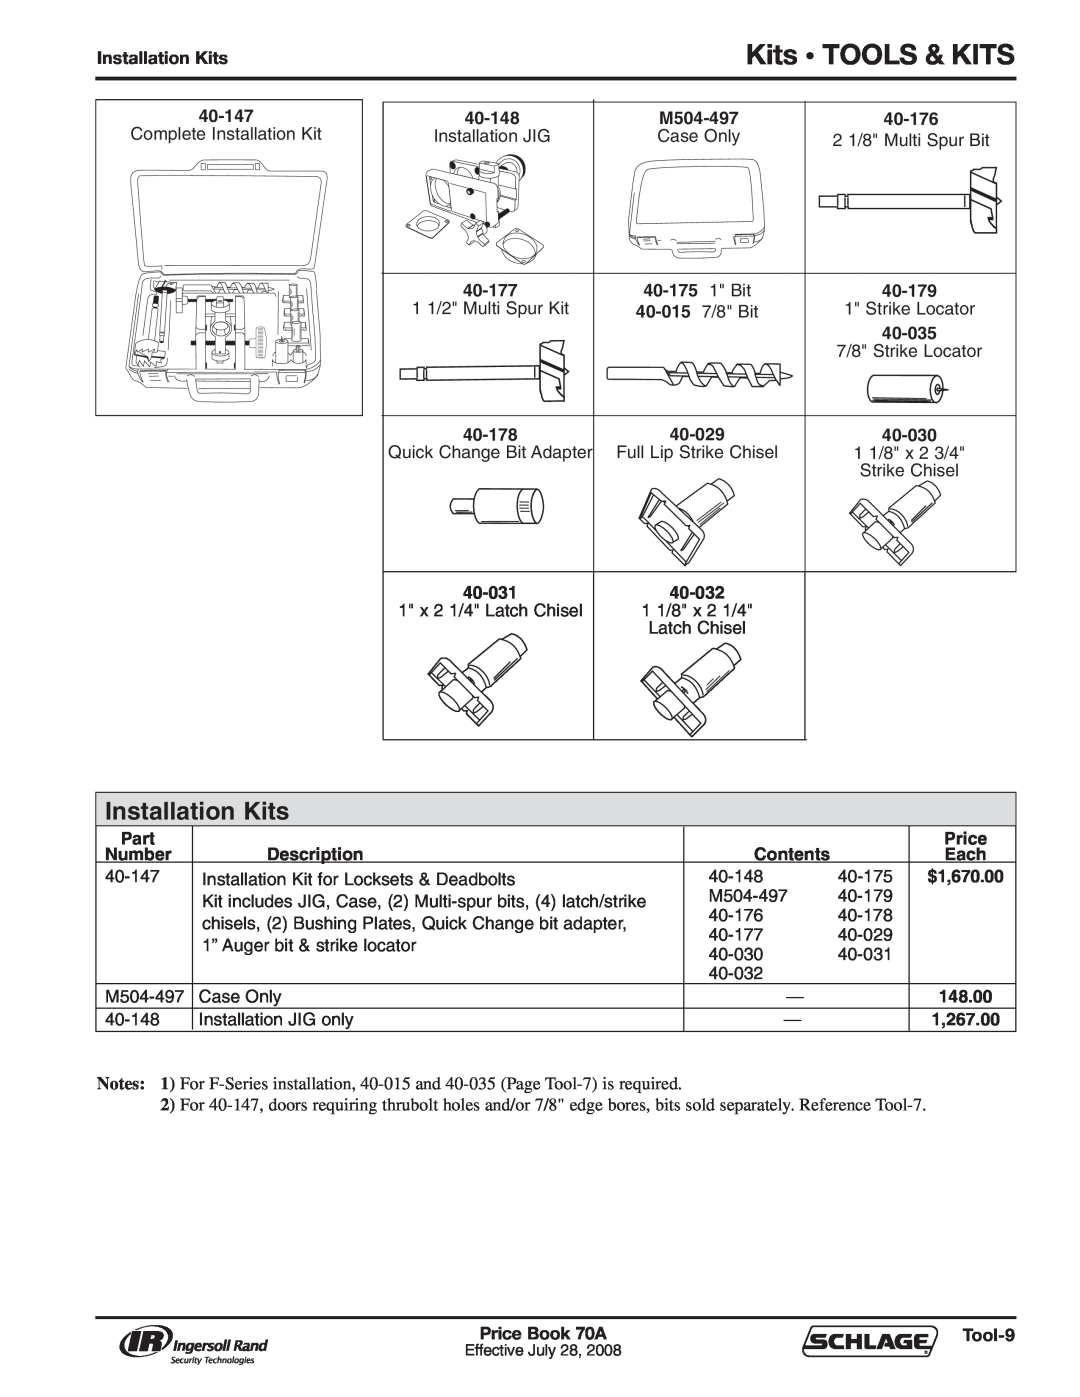 Schlage 70A manual Kits • TOOLS & KITS, Installation Kits 